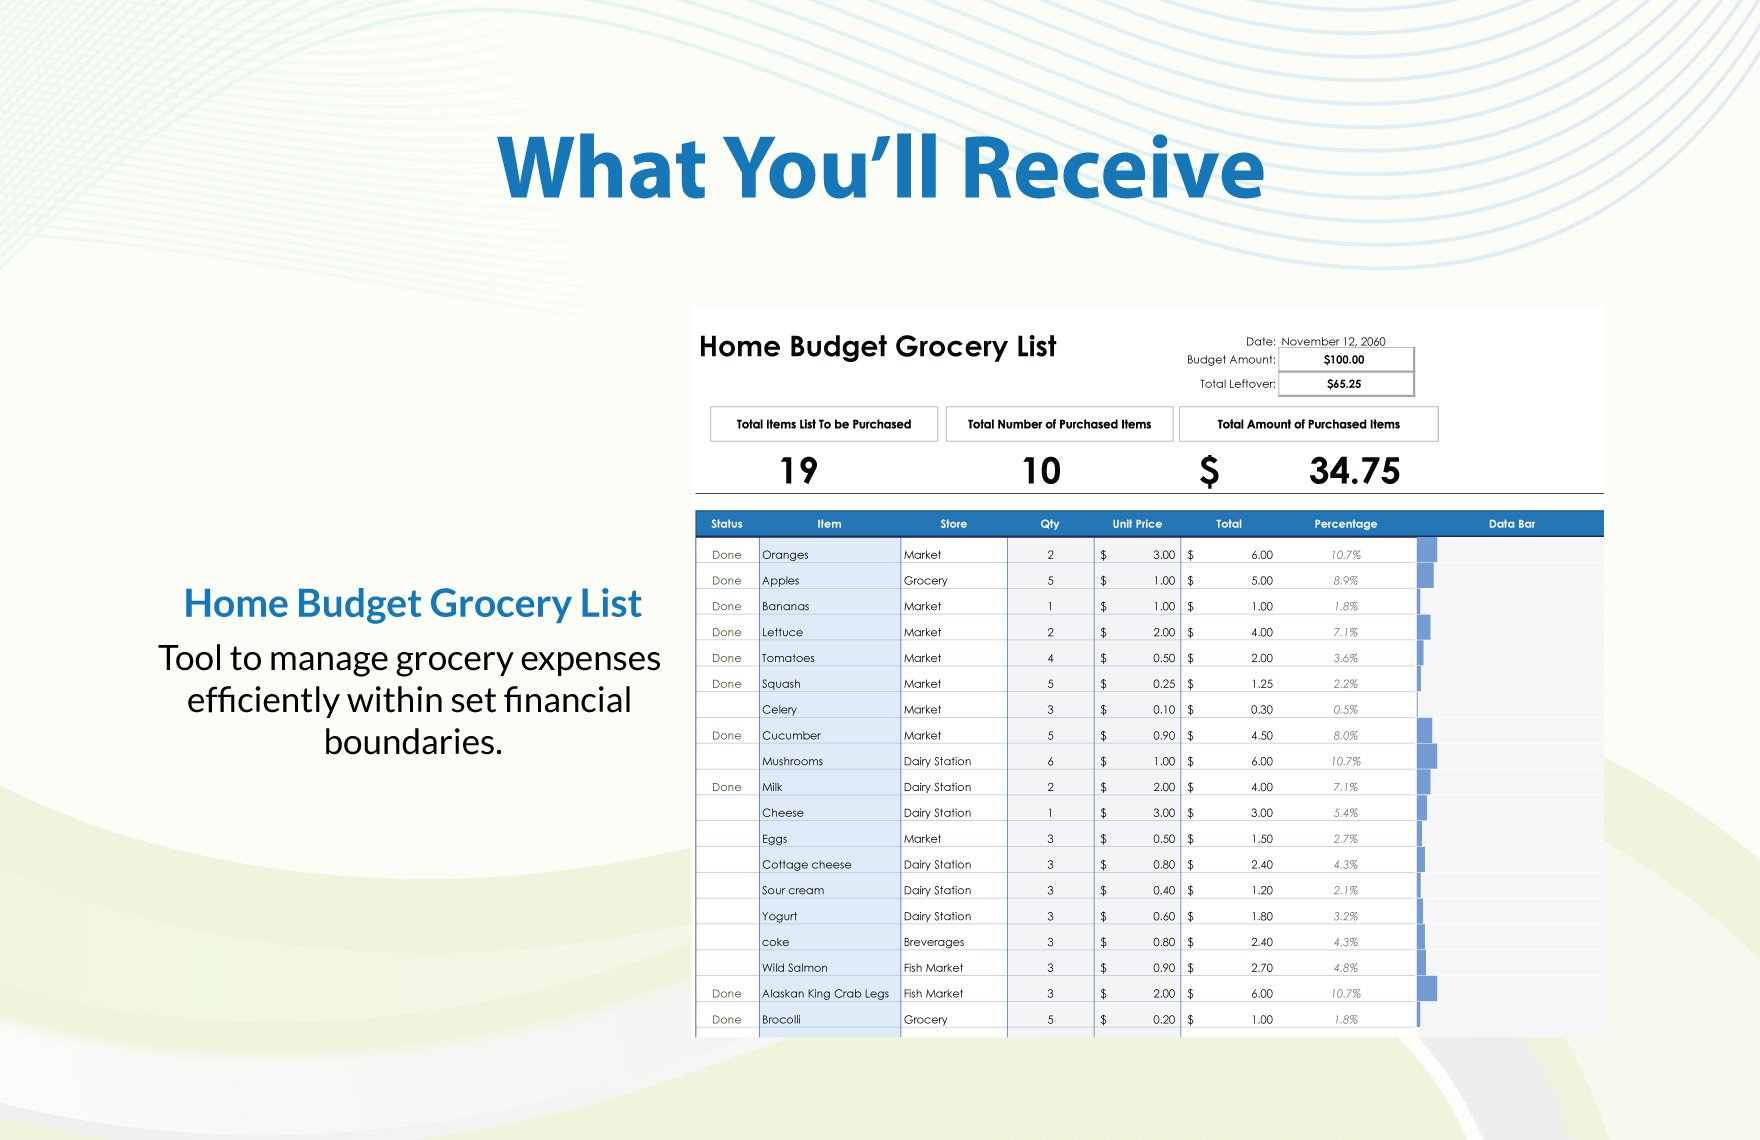 Home Budget Grocery List